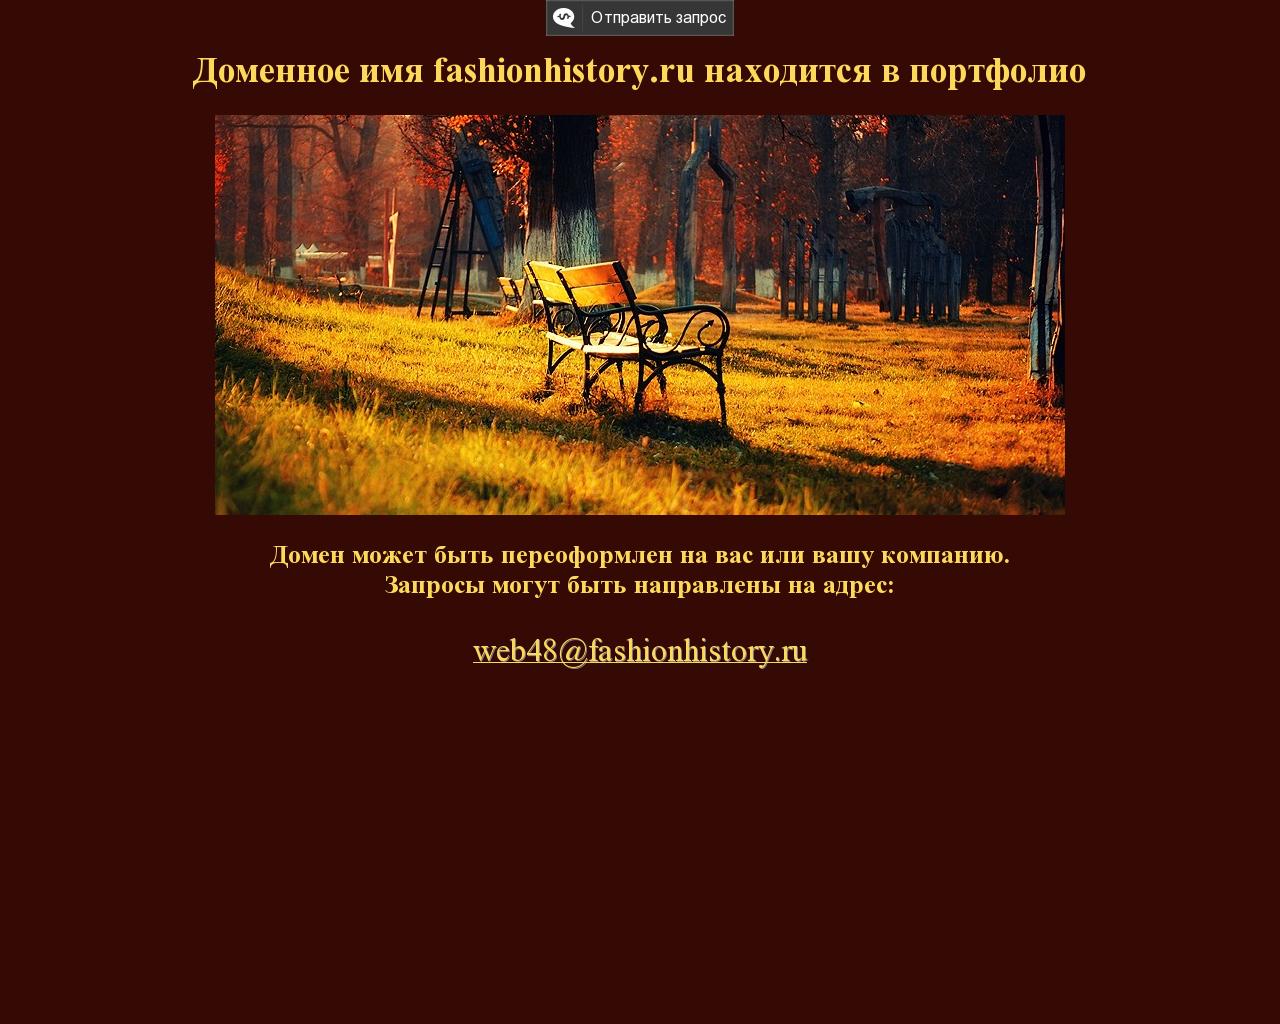 Изображение сайта fashionhistory.ru в разрешении 1280x1024